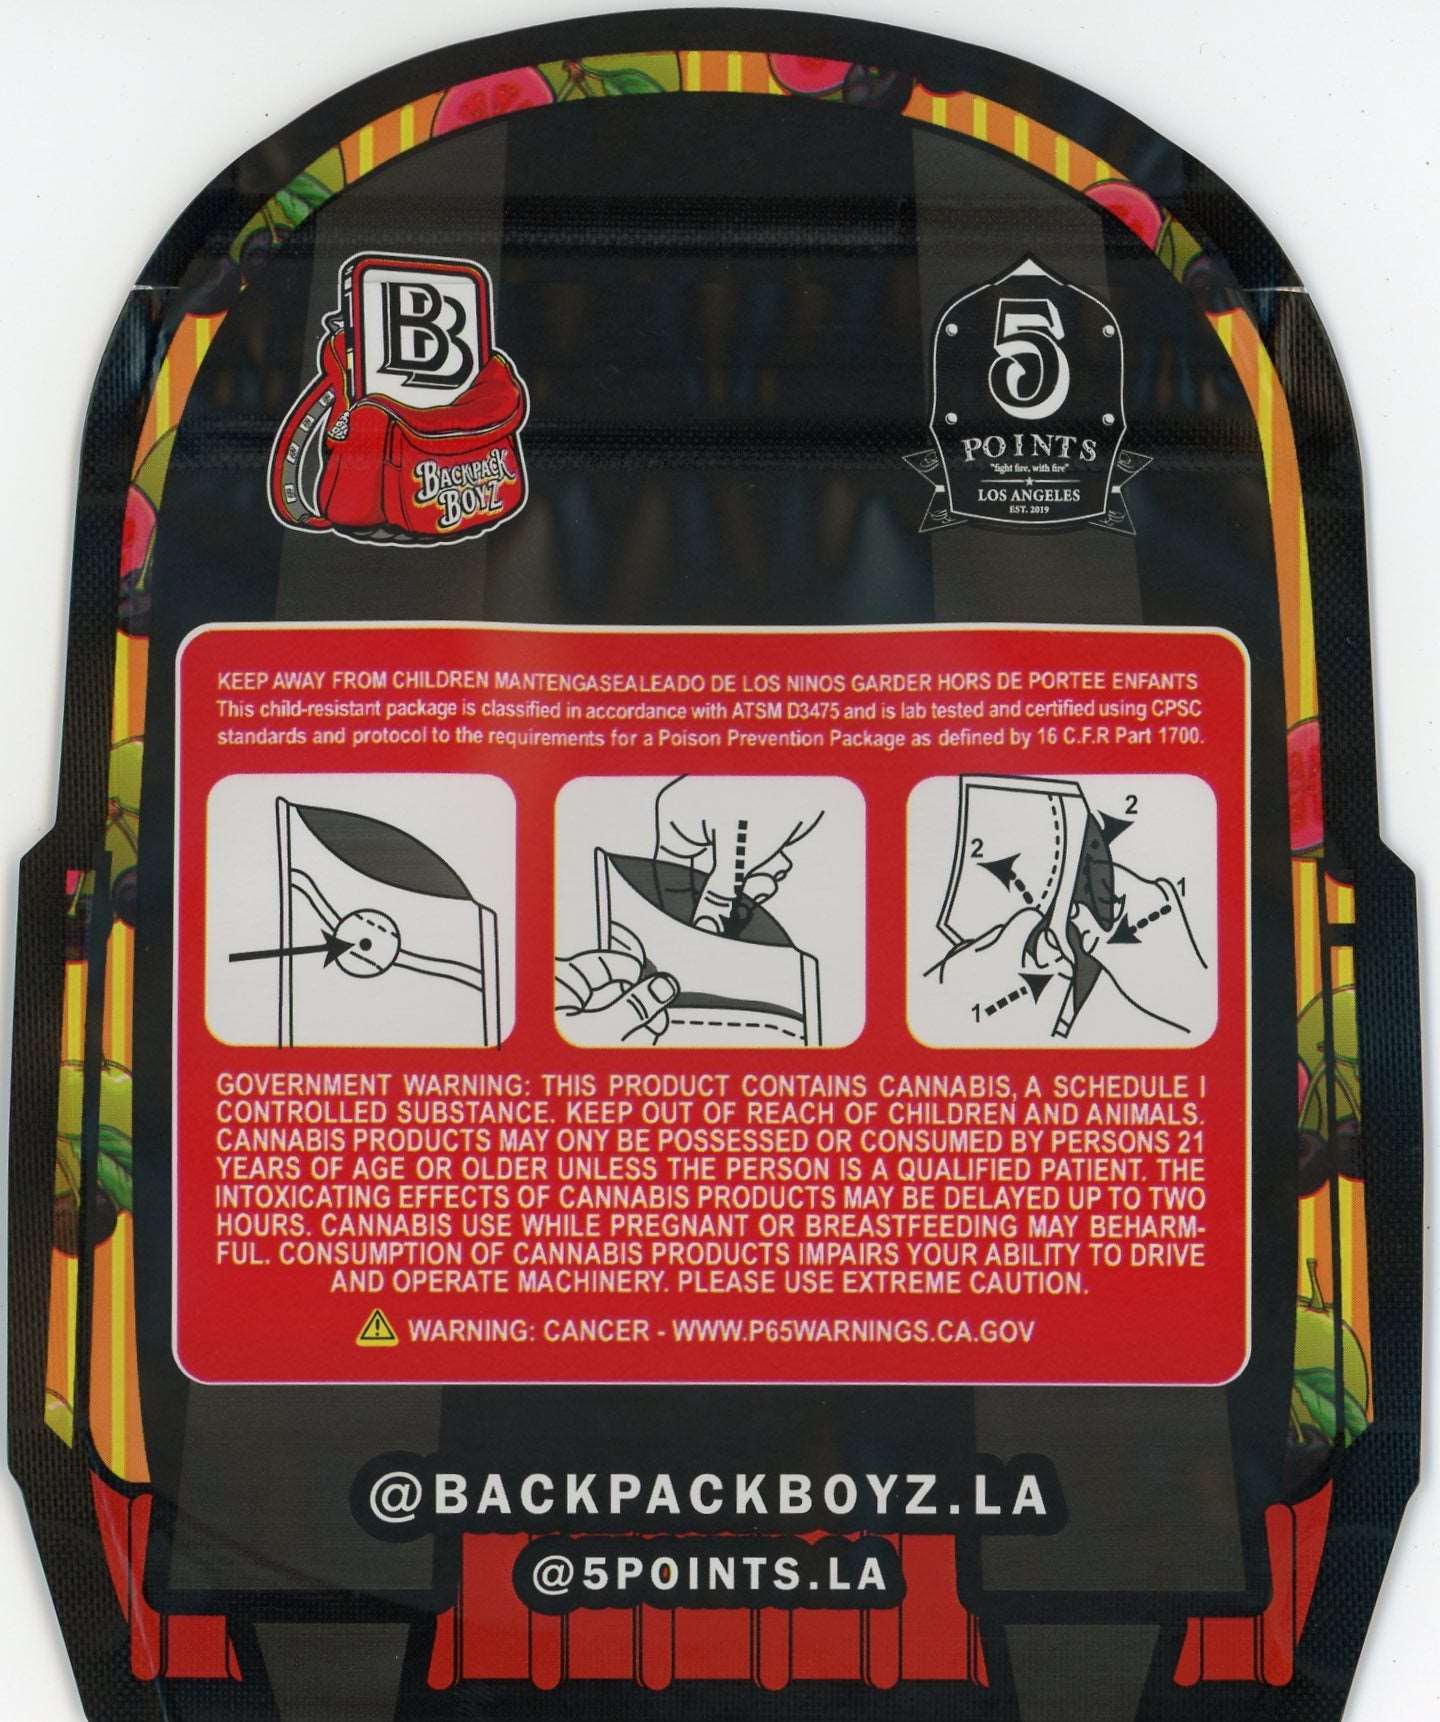 Backpack Boyz Mylar Bags 3.5g - Black Cherry Guava